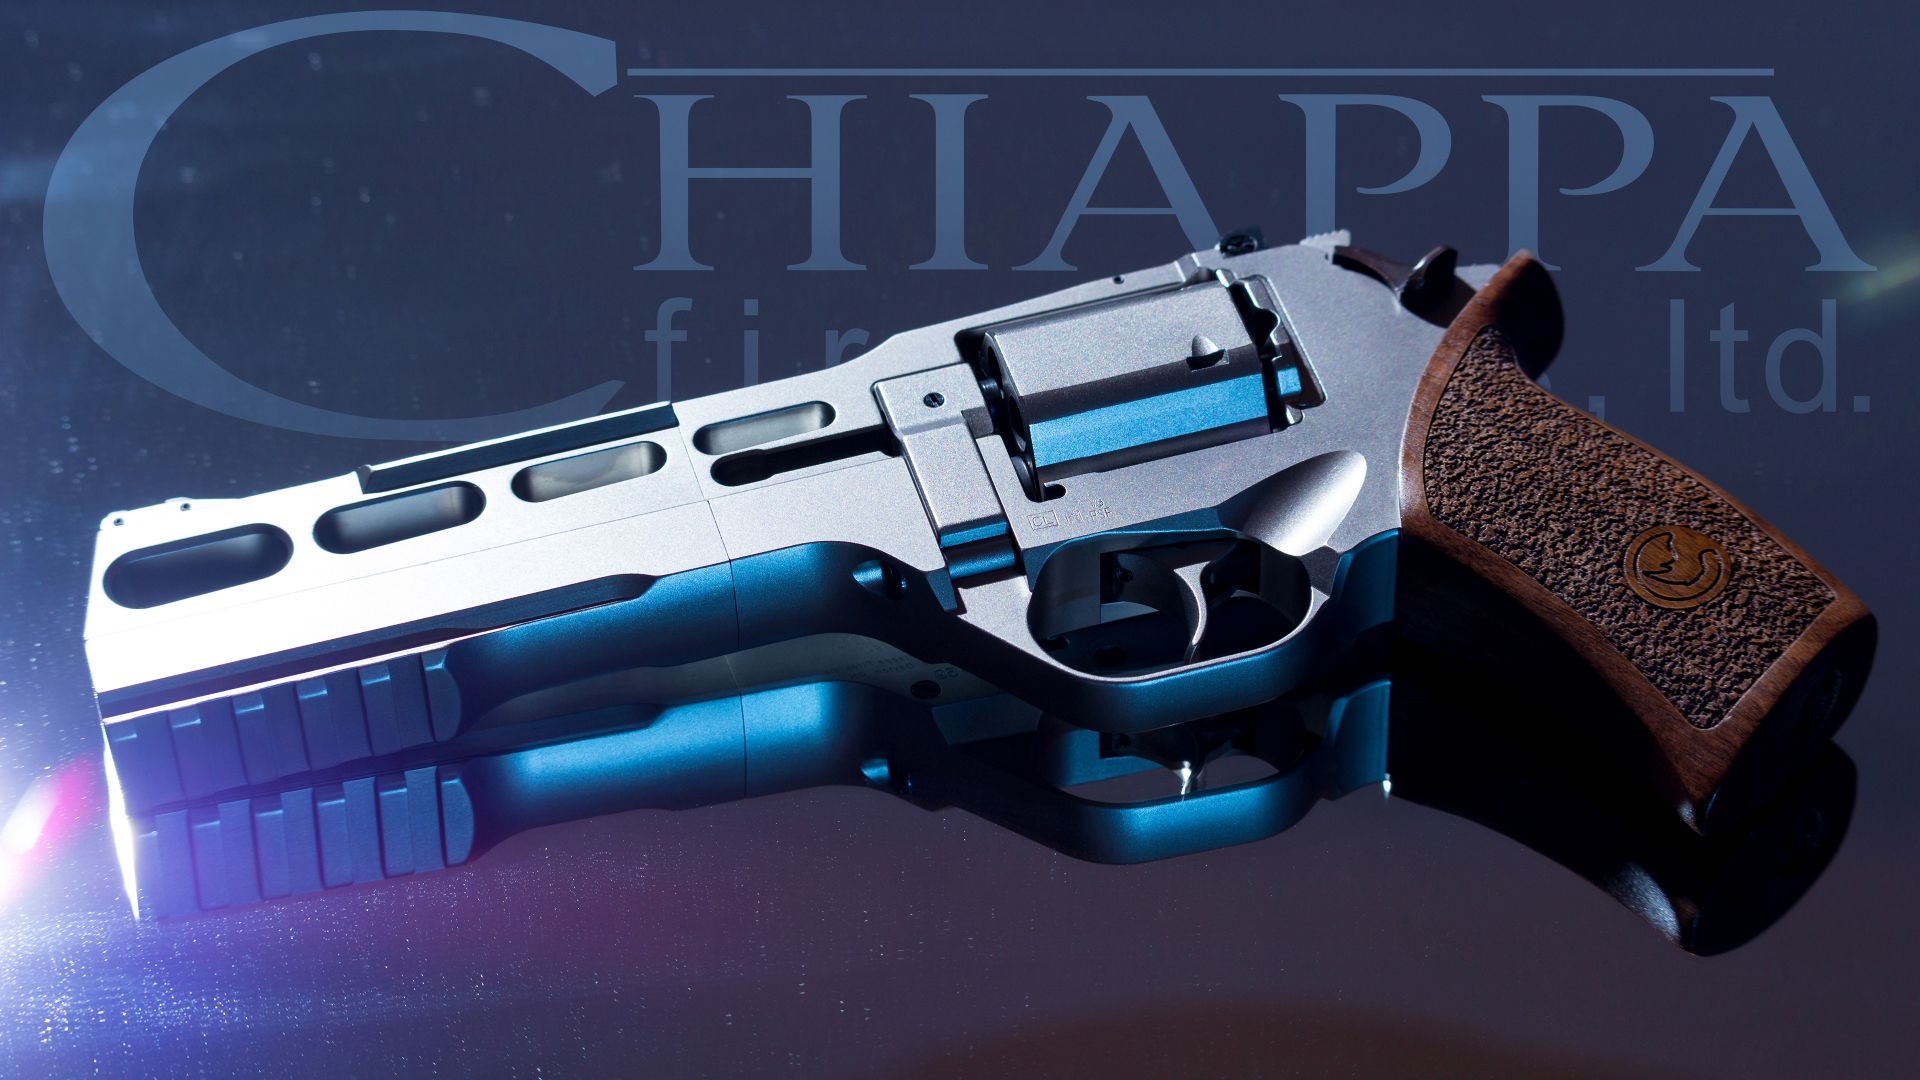 Чаппа рино 60ДС, револьвер, Rhino 60DS, Chiappa Rhino, Revolver (horizontal)